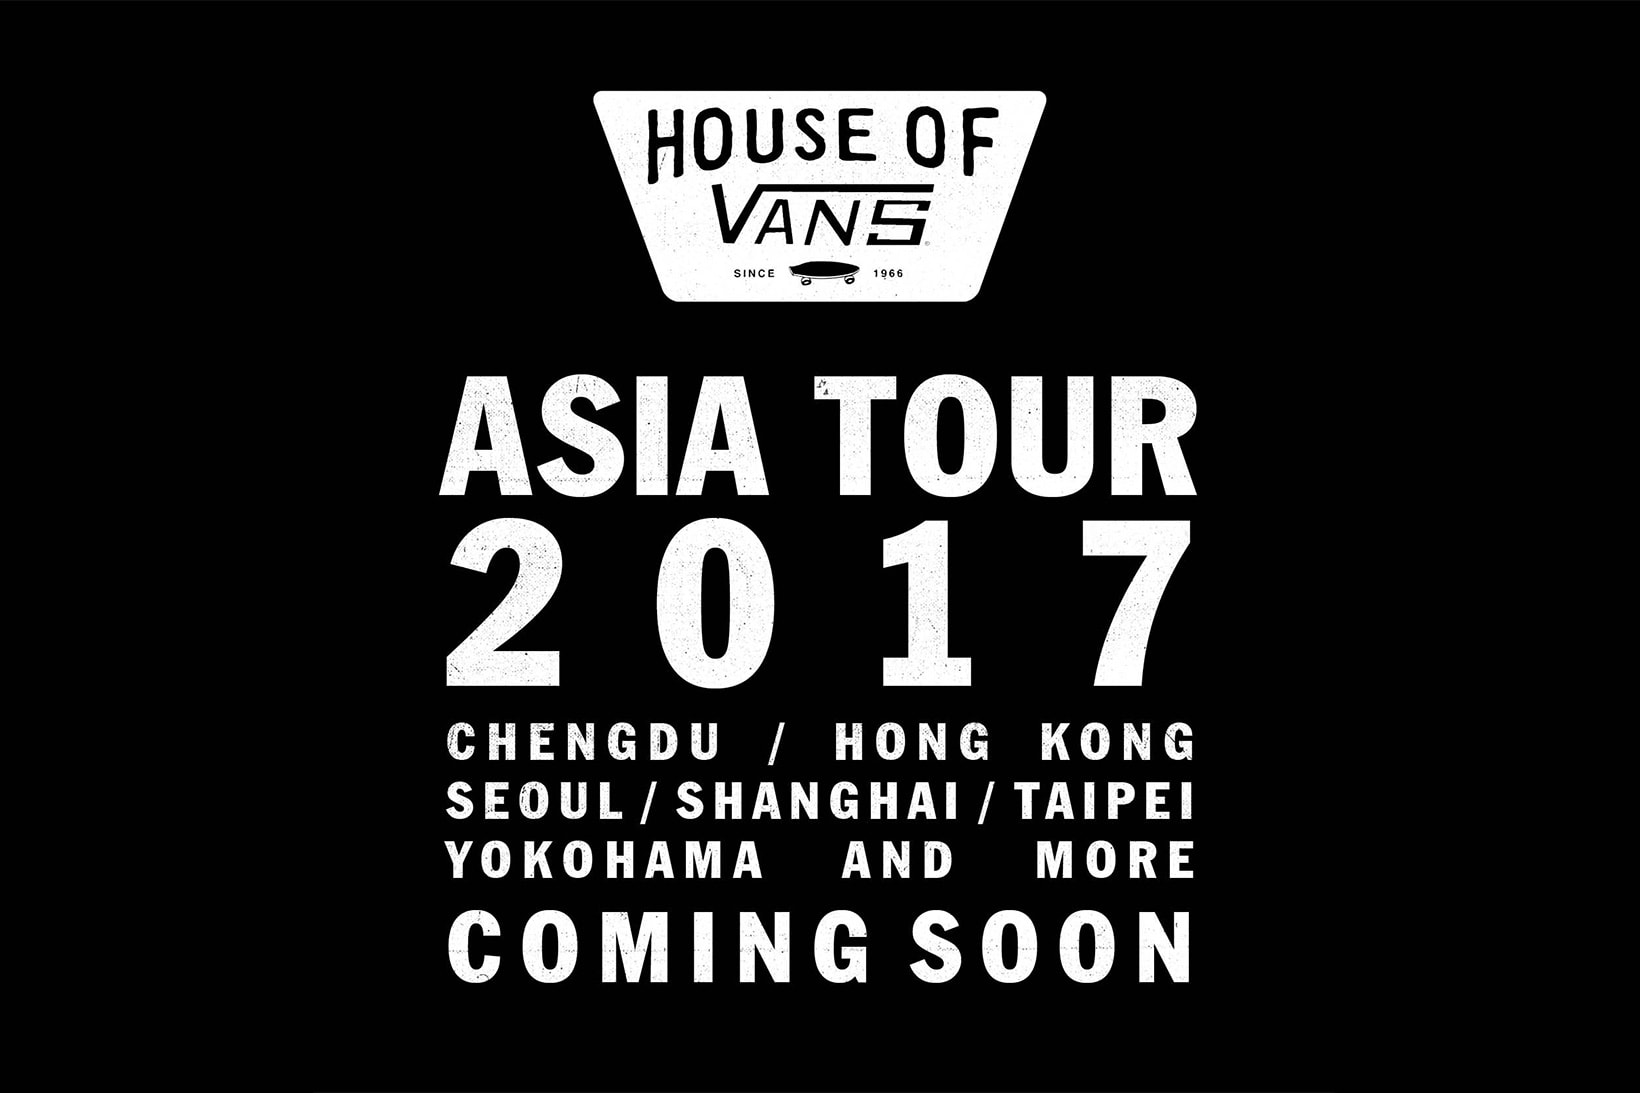 House of Vans 亞洲區巡迴活動消息發佈